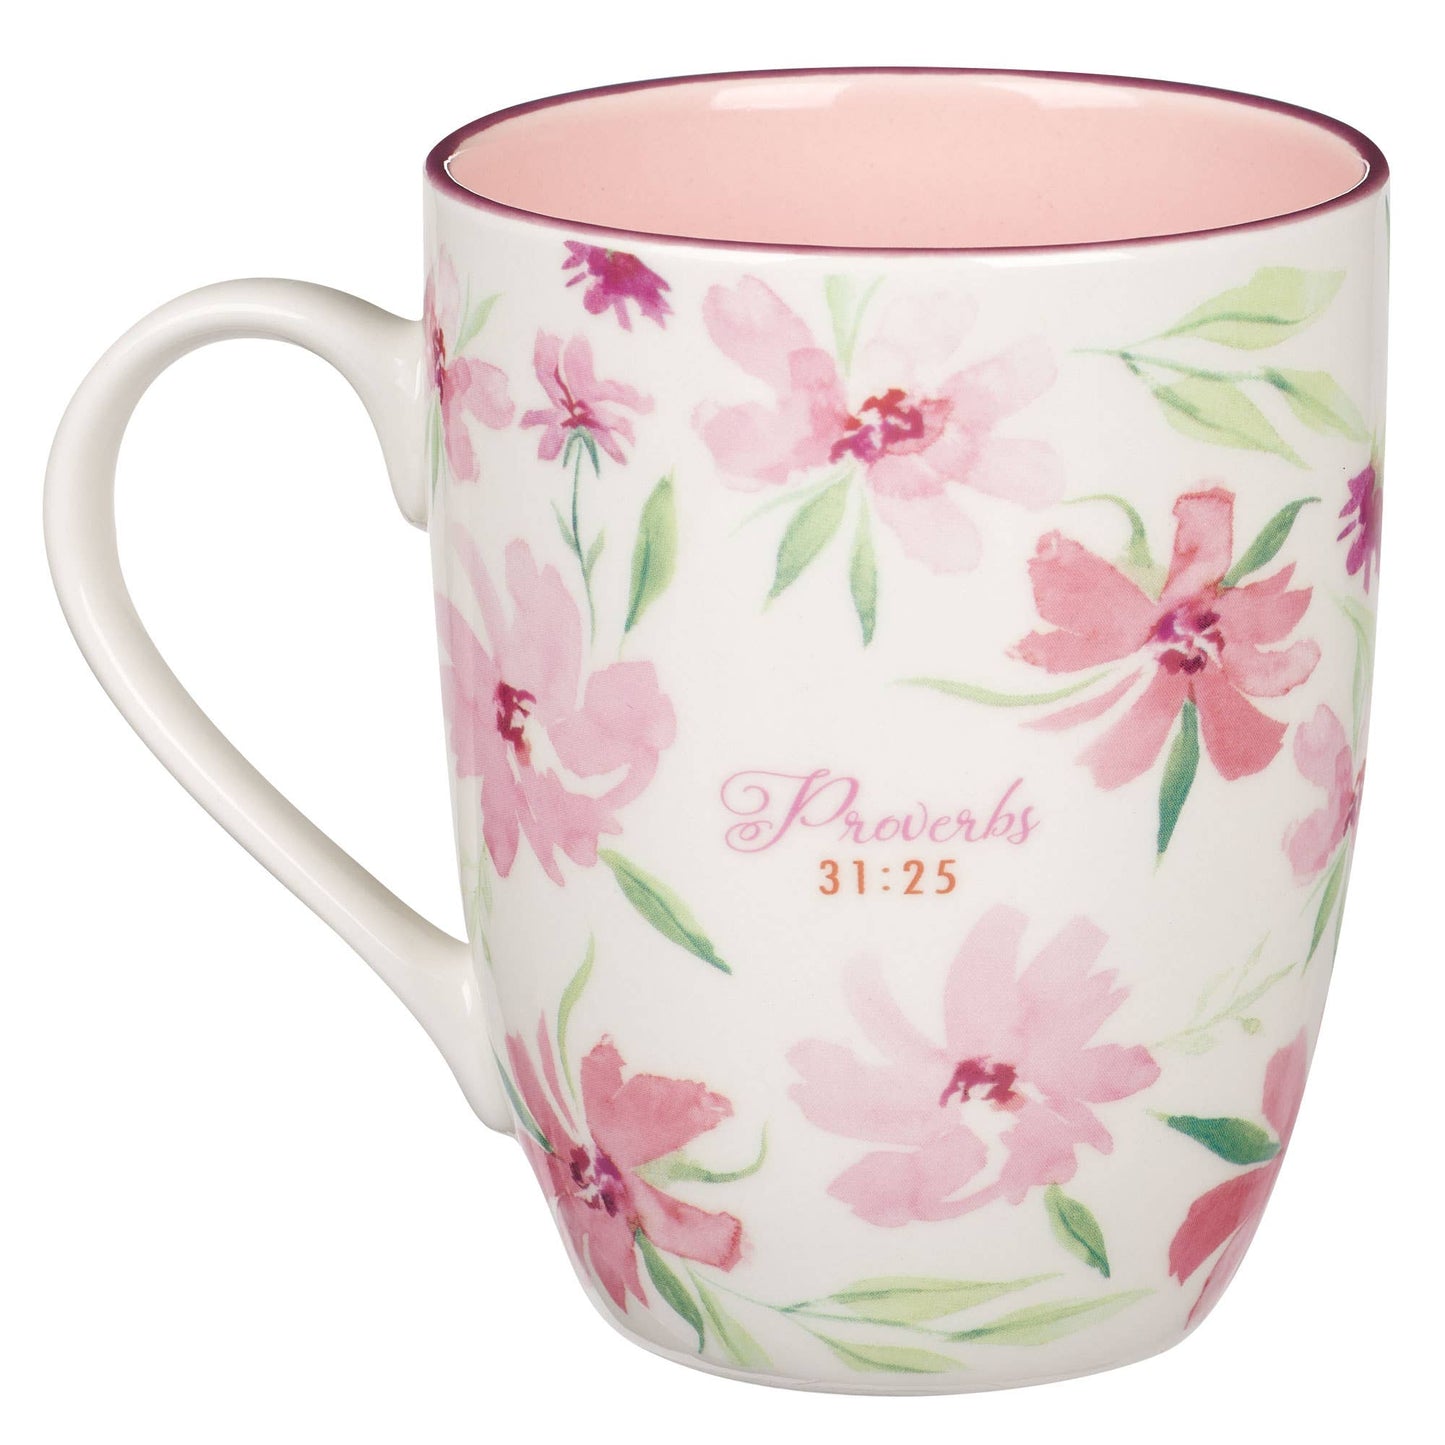 Mug Pink Floral Strength & Dignity Prov. 31:25 (1055)